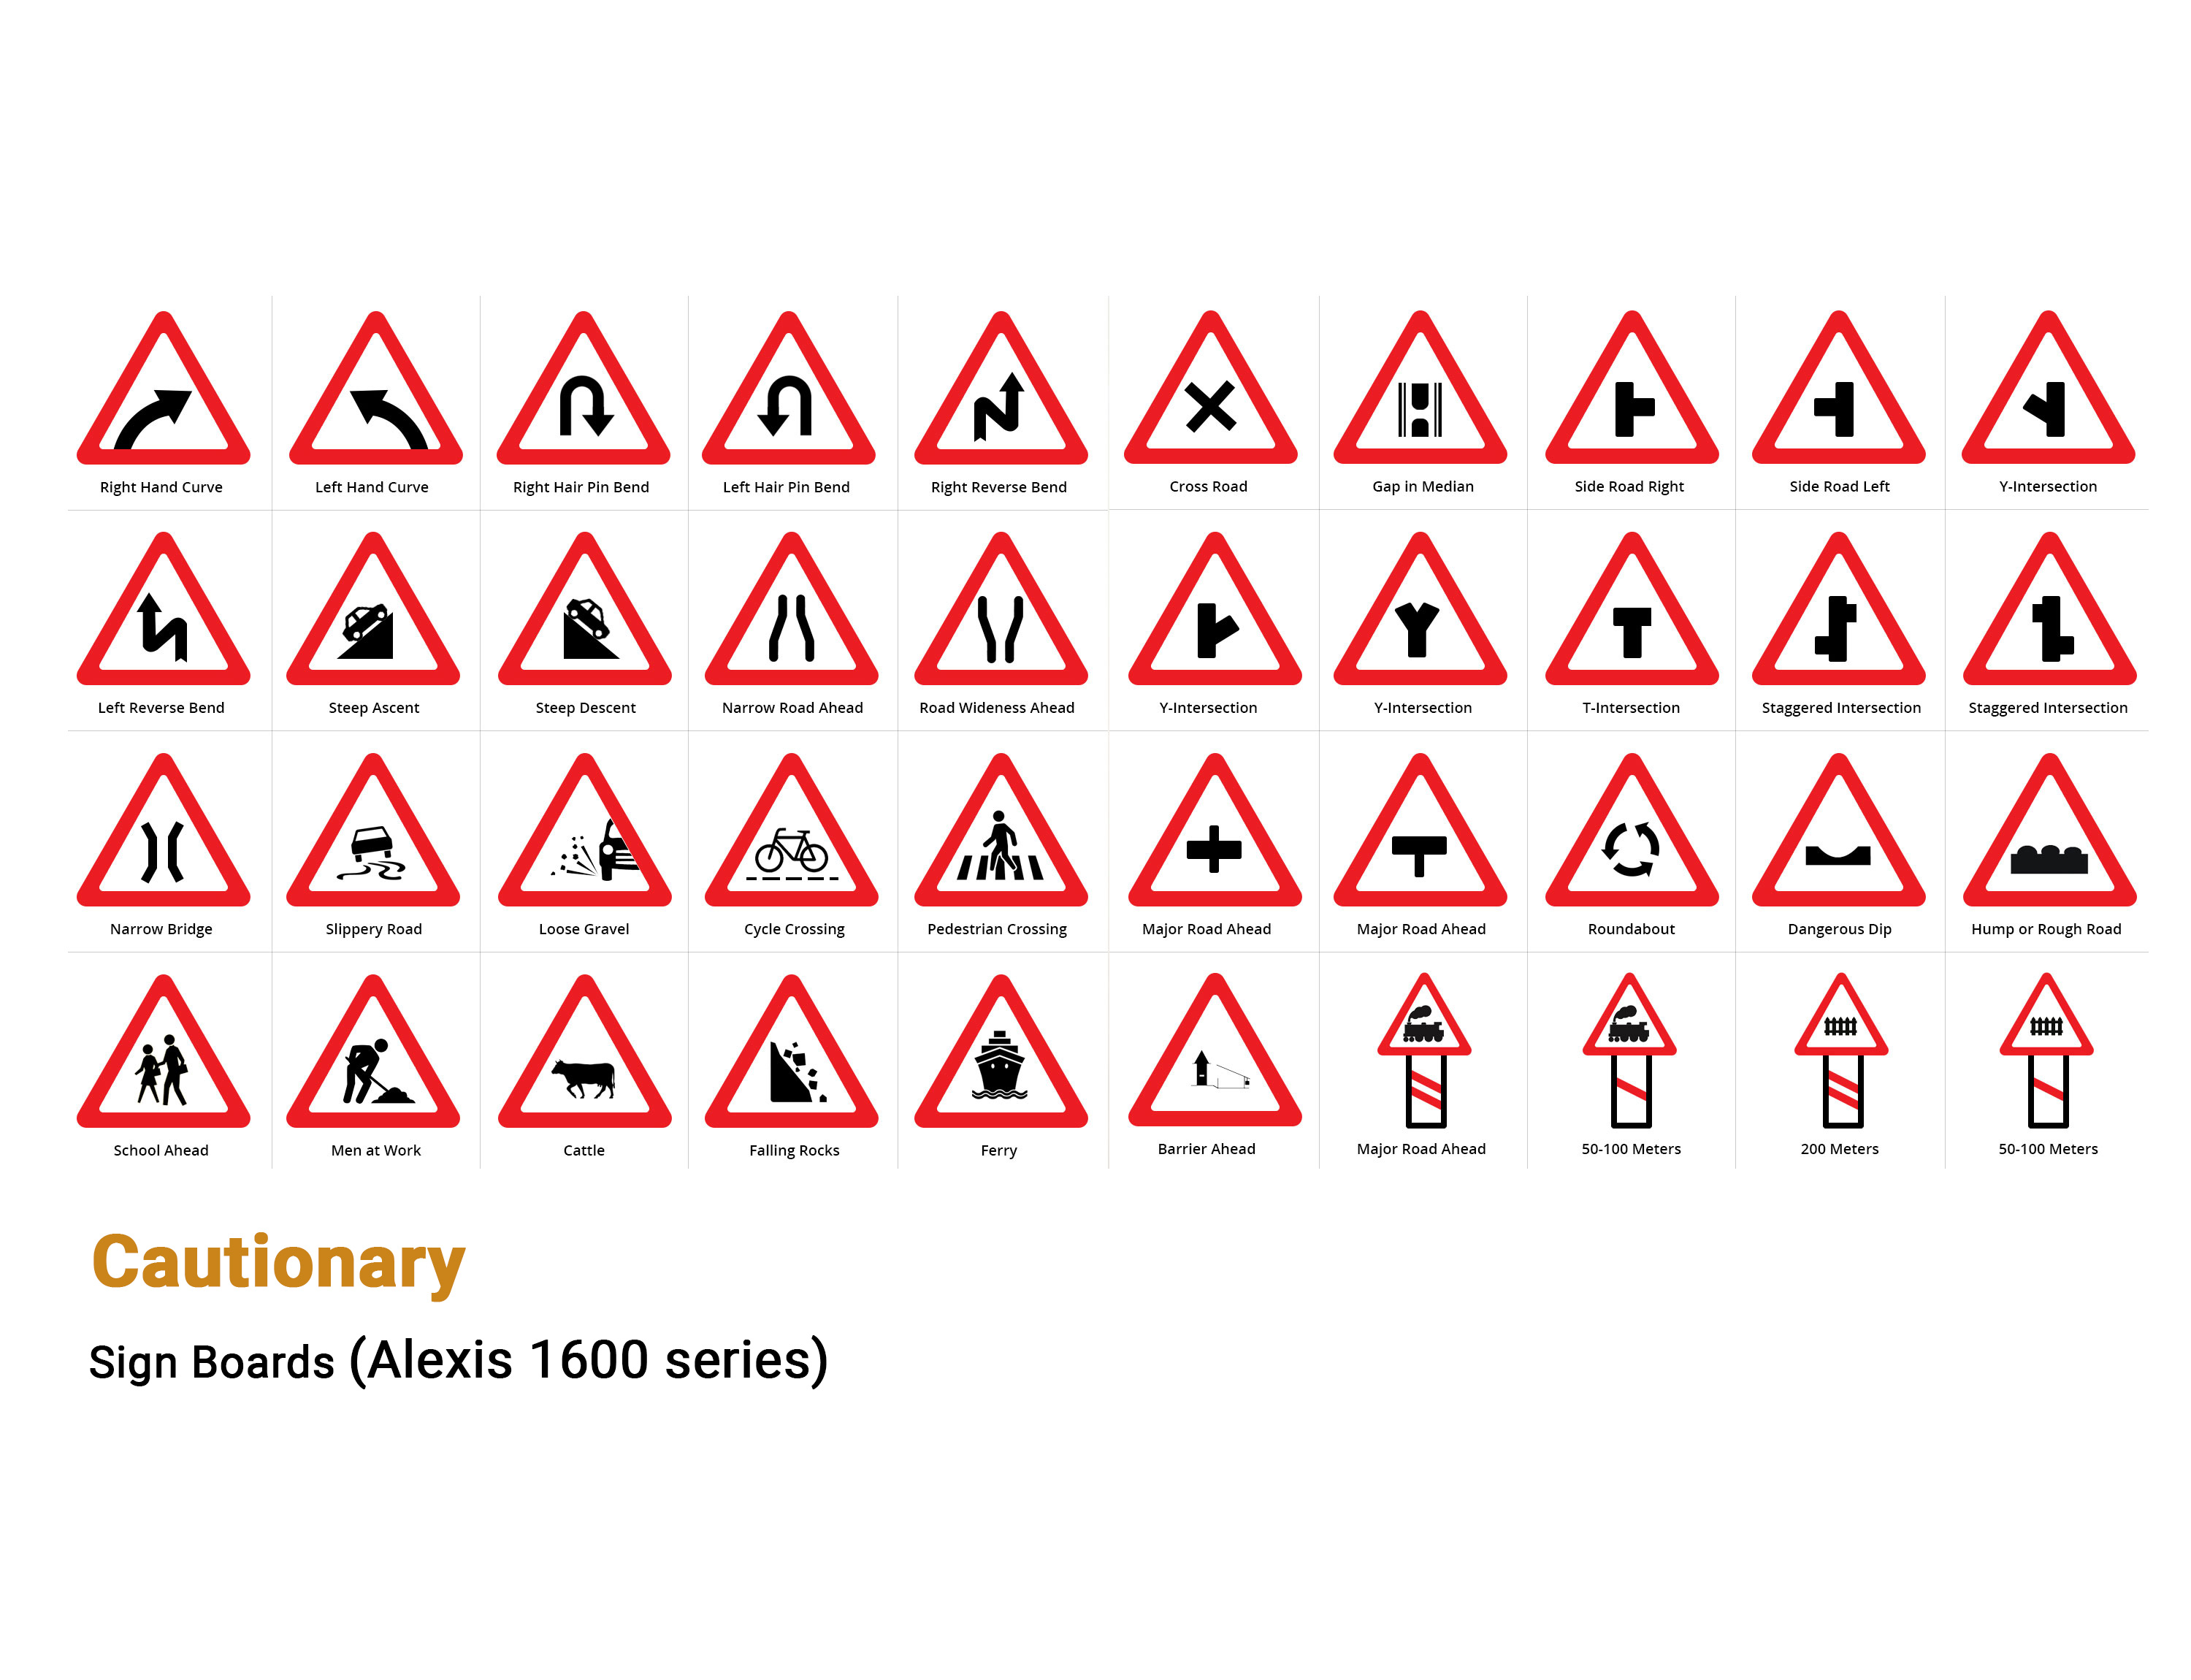 Cautionary/ Warning Signs